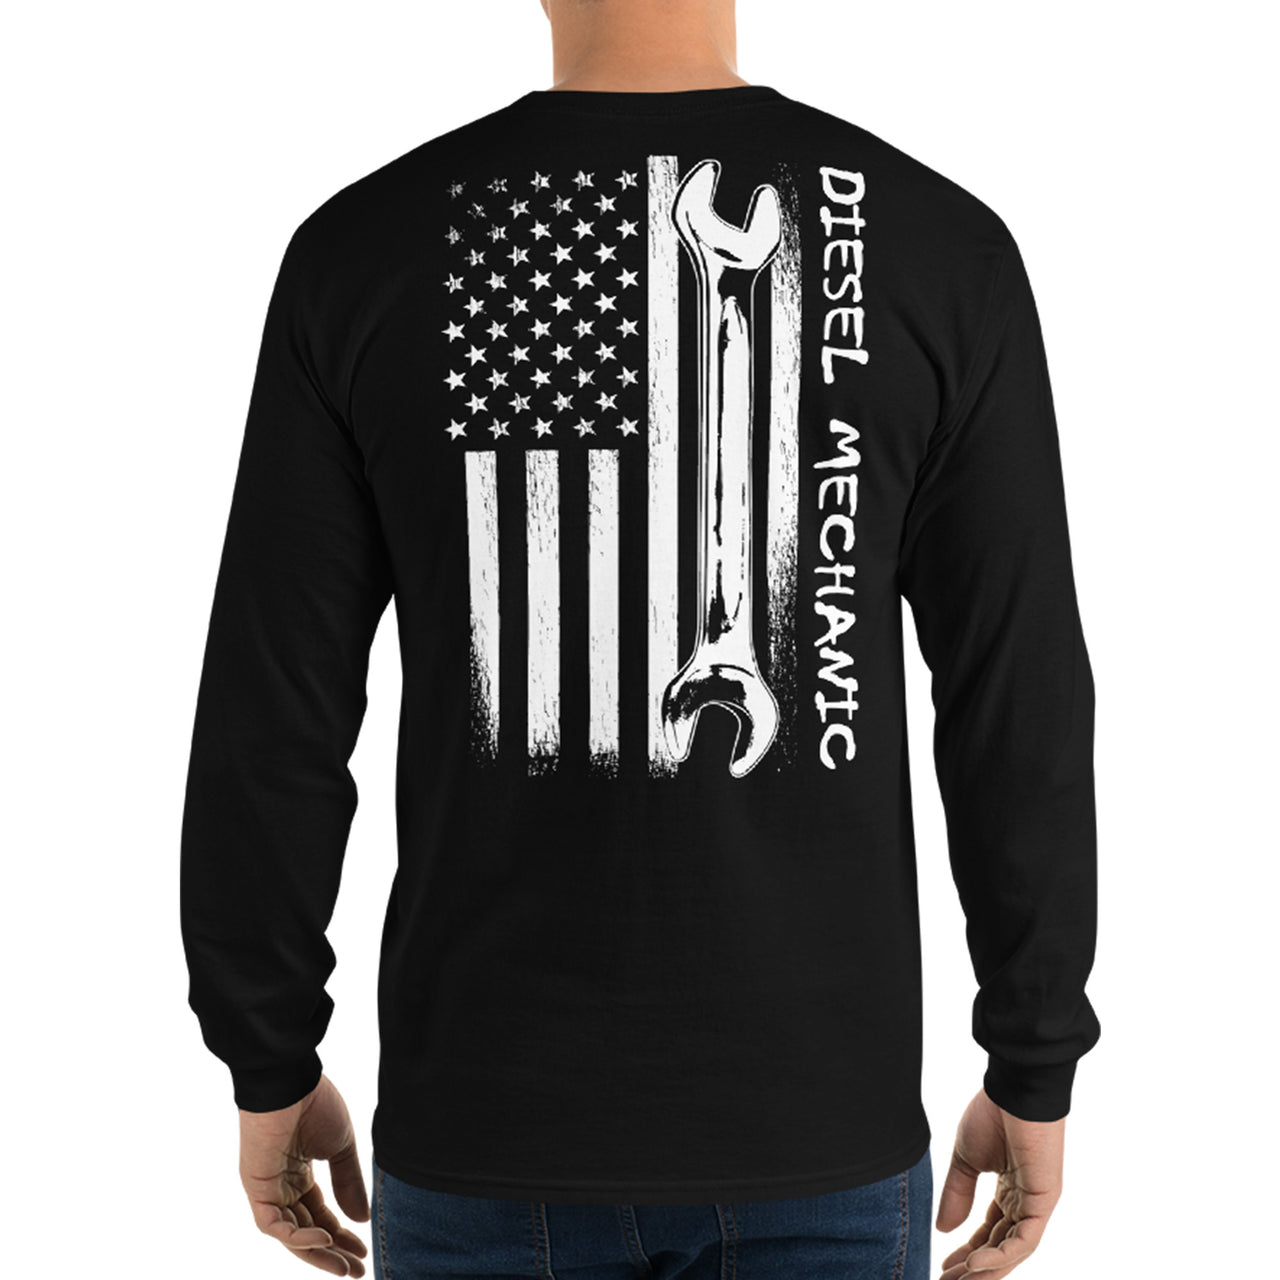 Diesel Mechanic American Flag Long Sleeve T-Shirt modeled in black back view